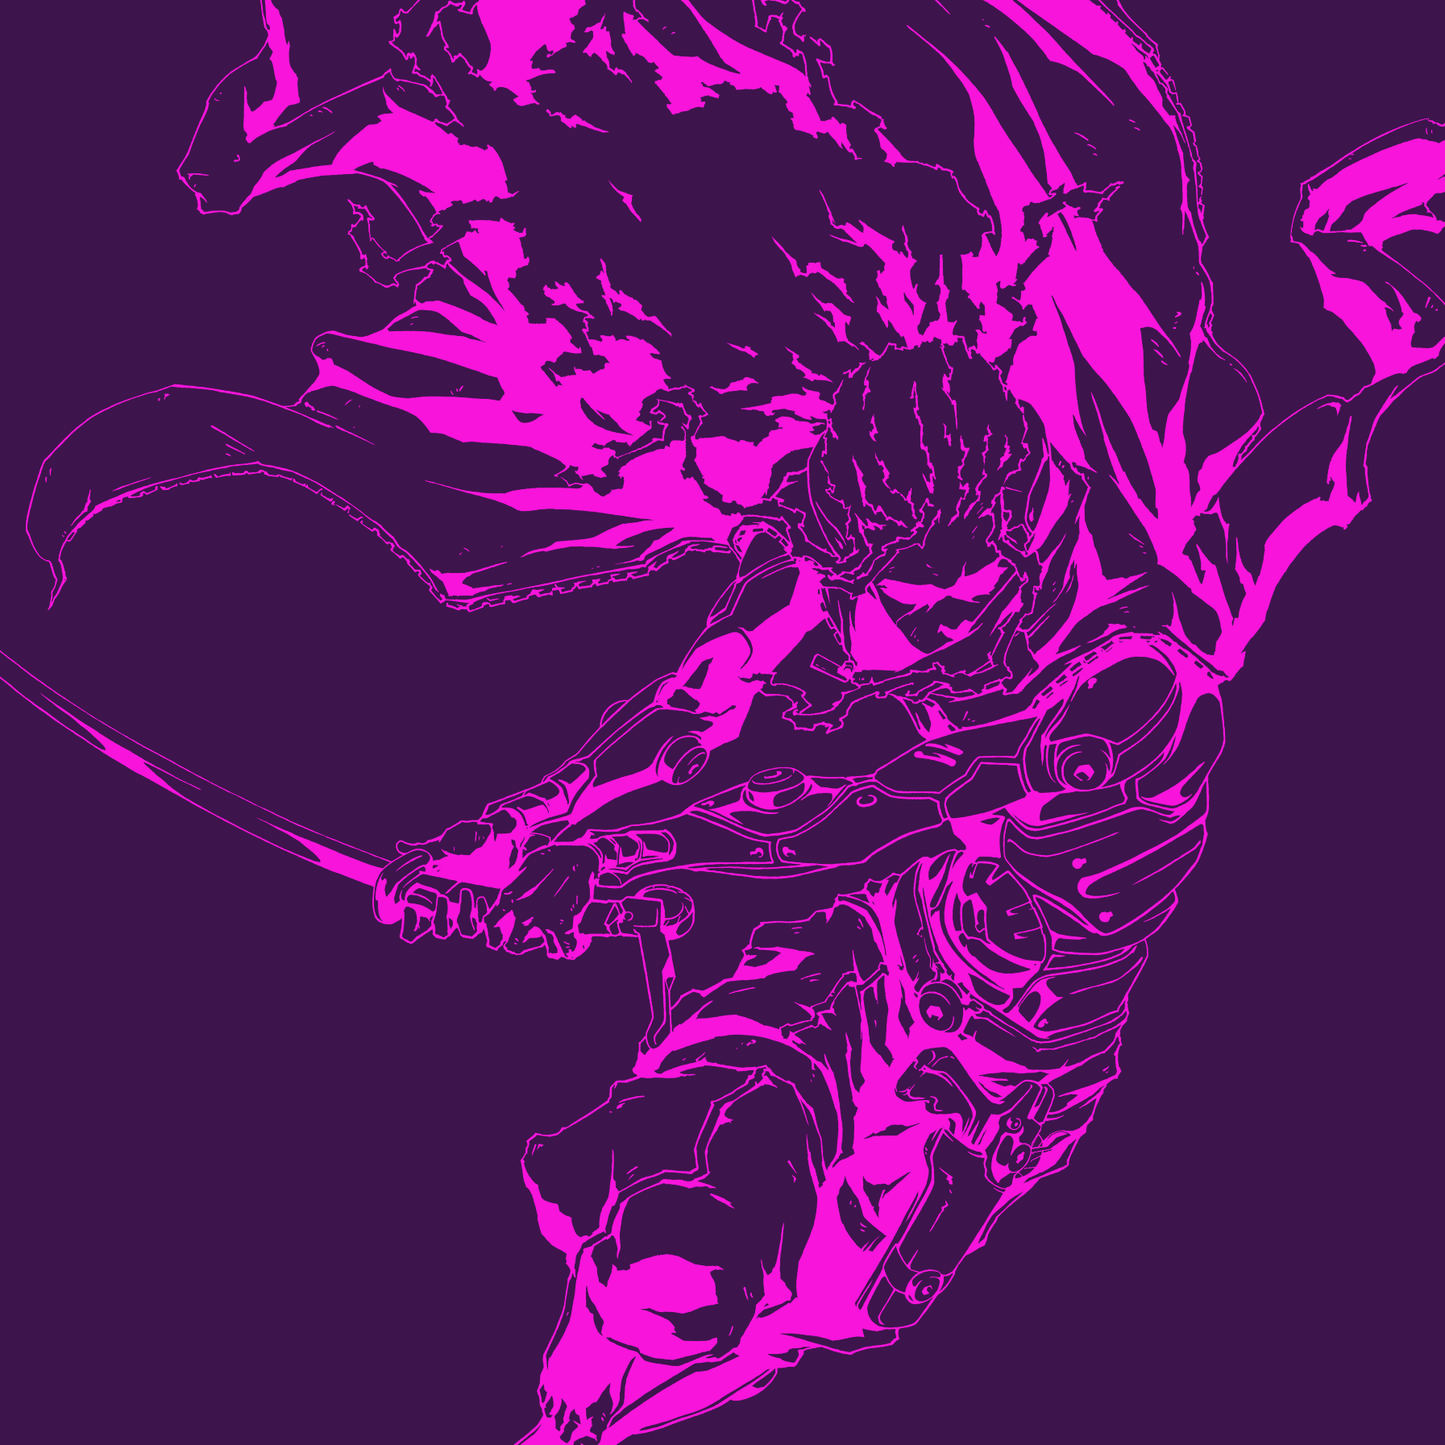 Rider T-shirt: Purple